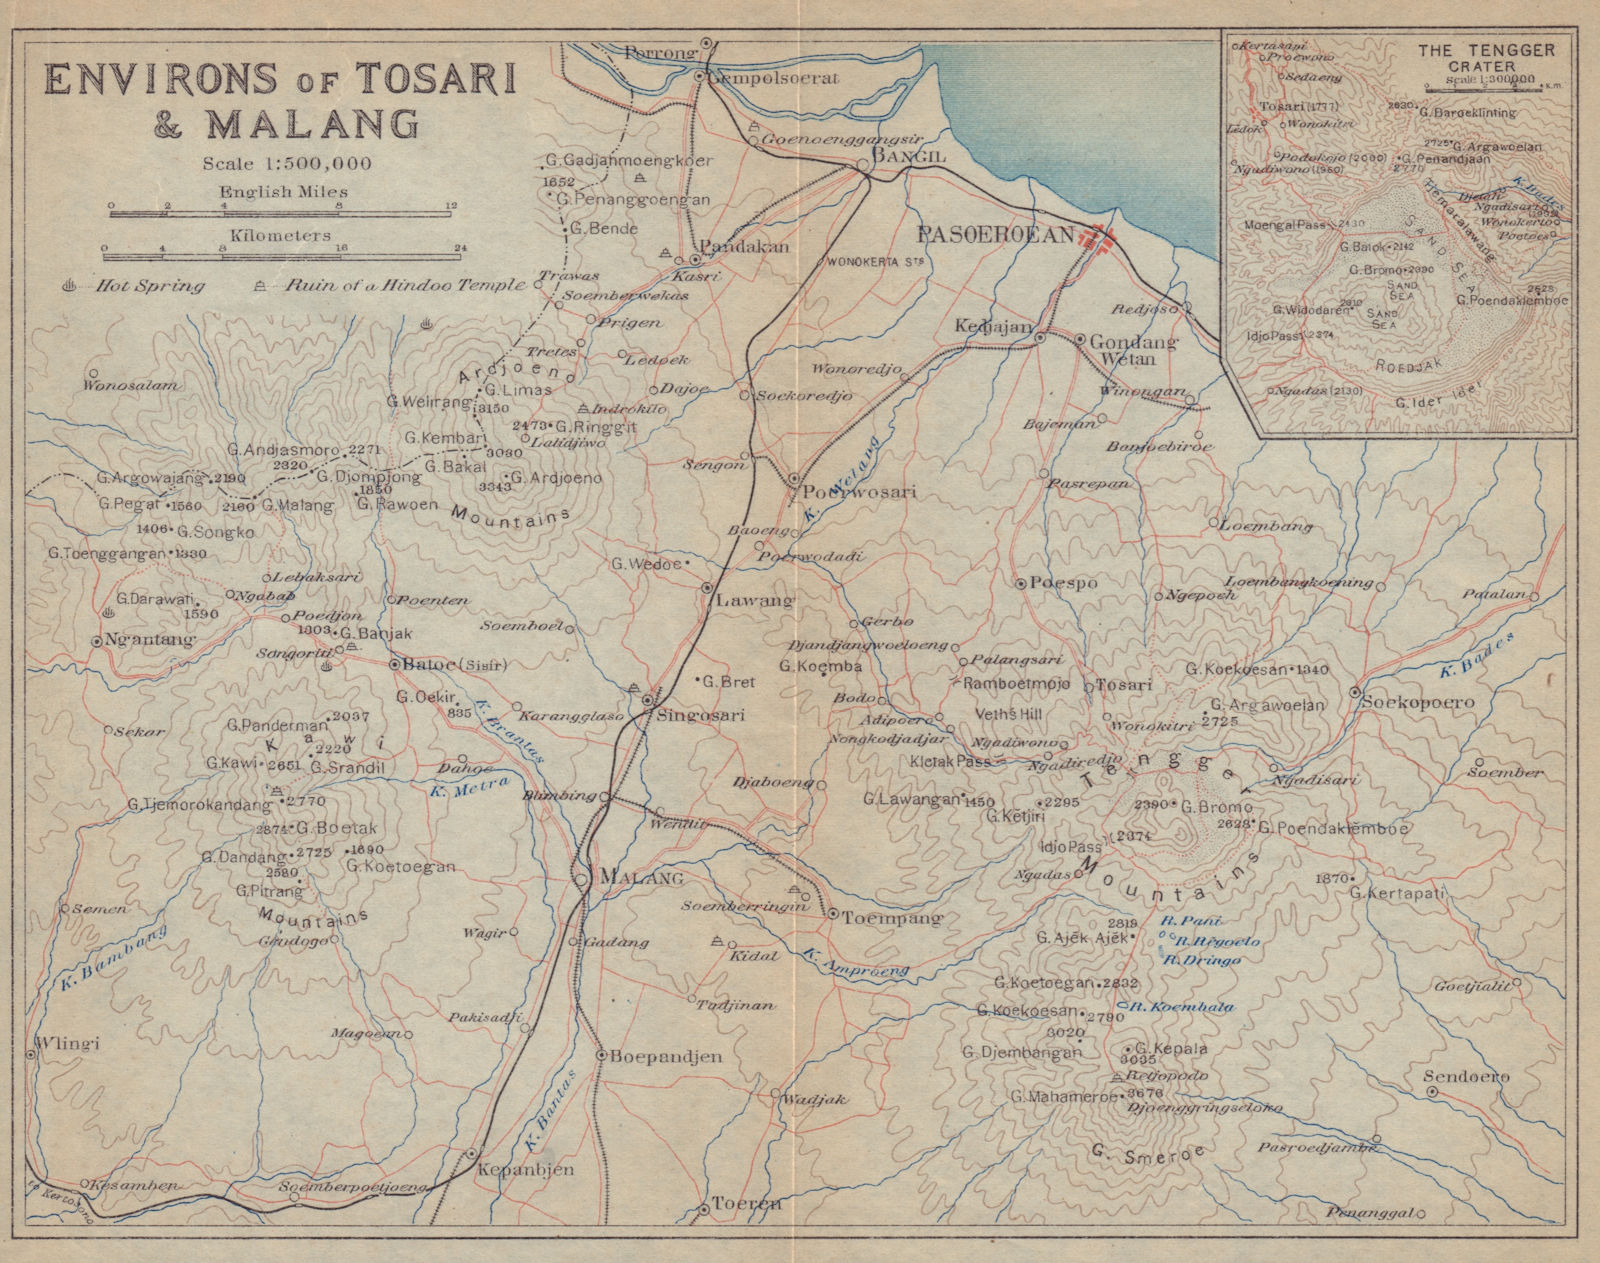 Tosari, Malang & environs. Pasuruan & Mount Bromo. East Java. Indonesia 1917 map